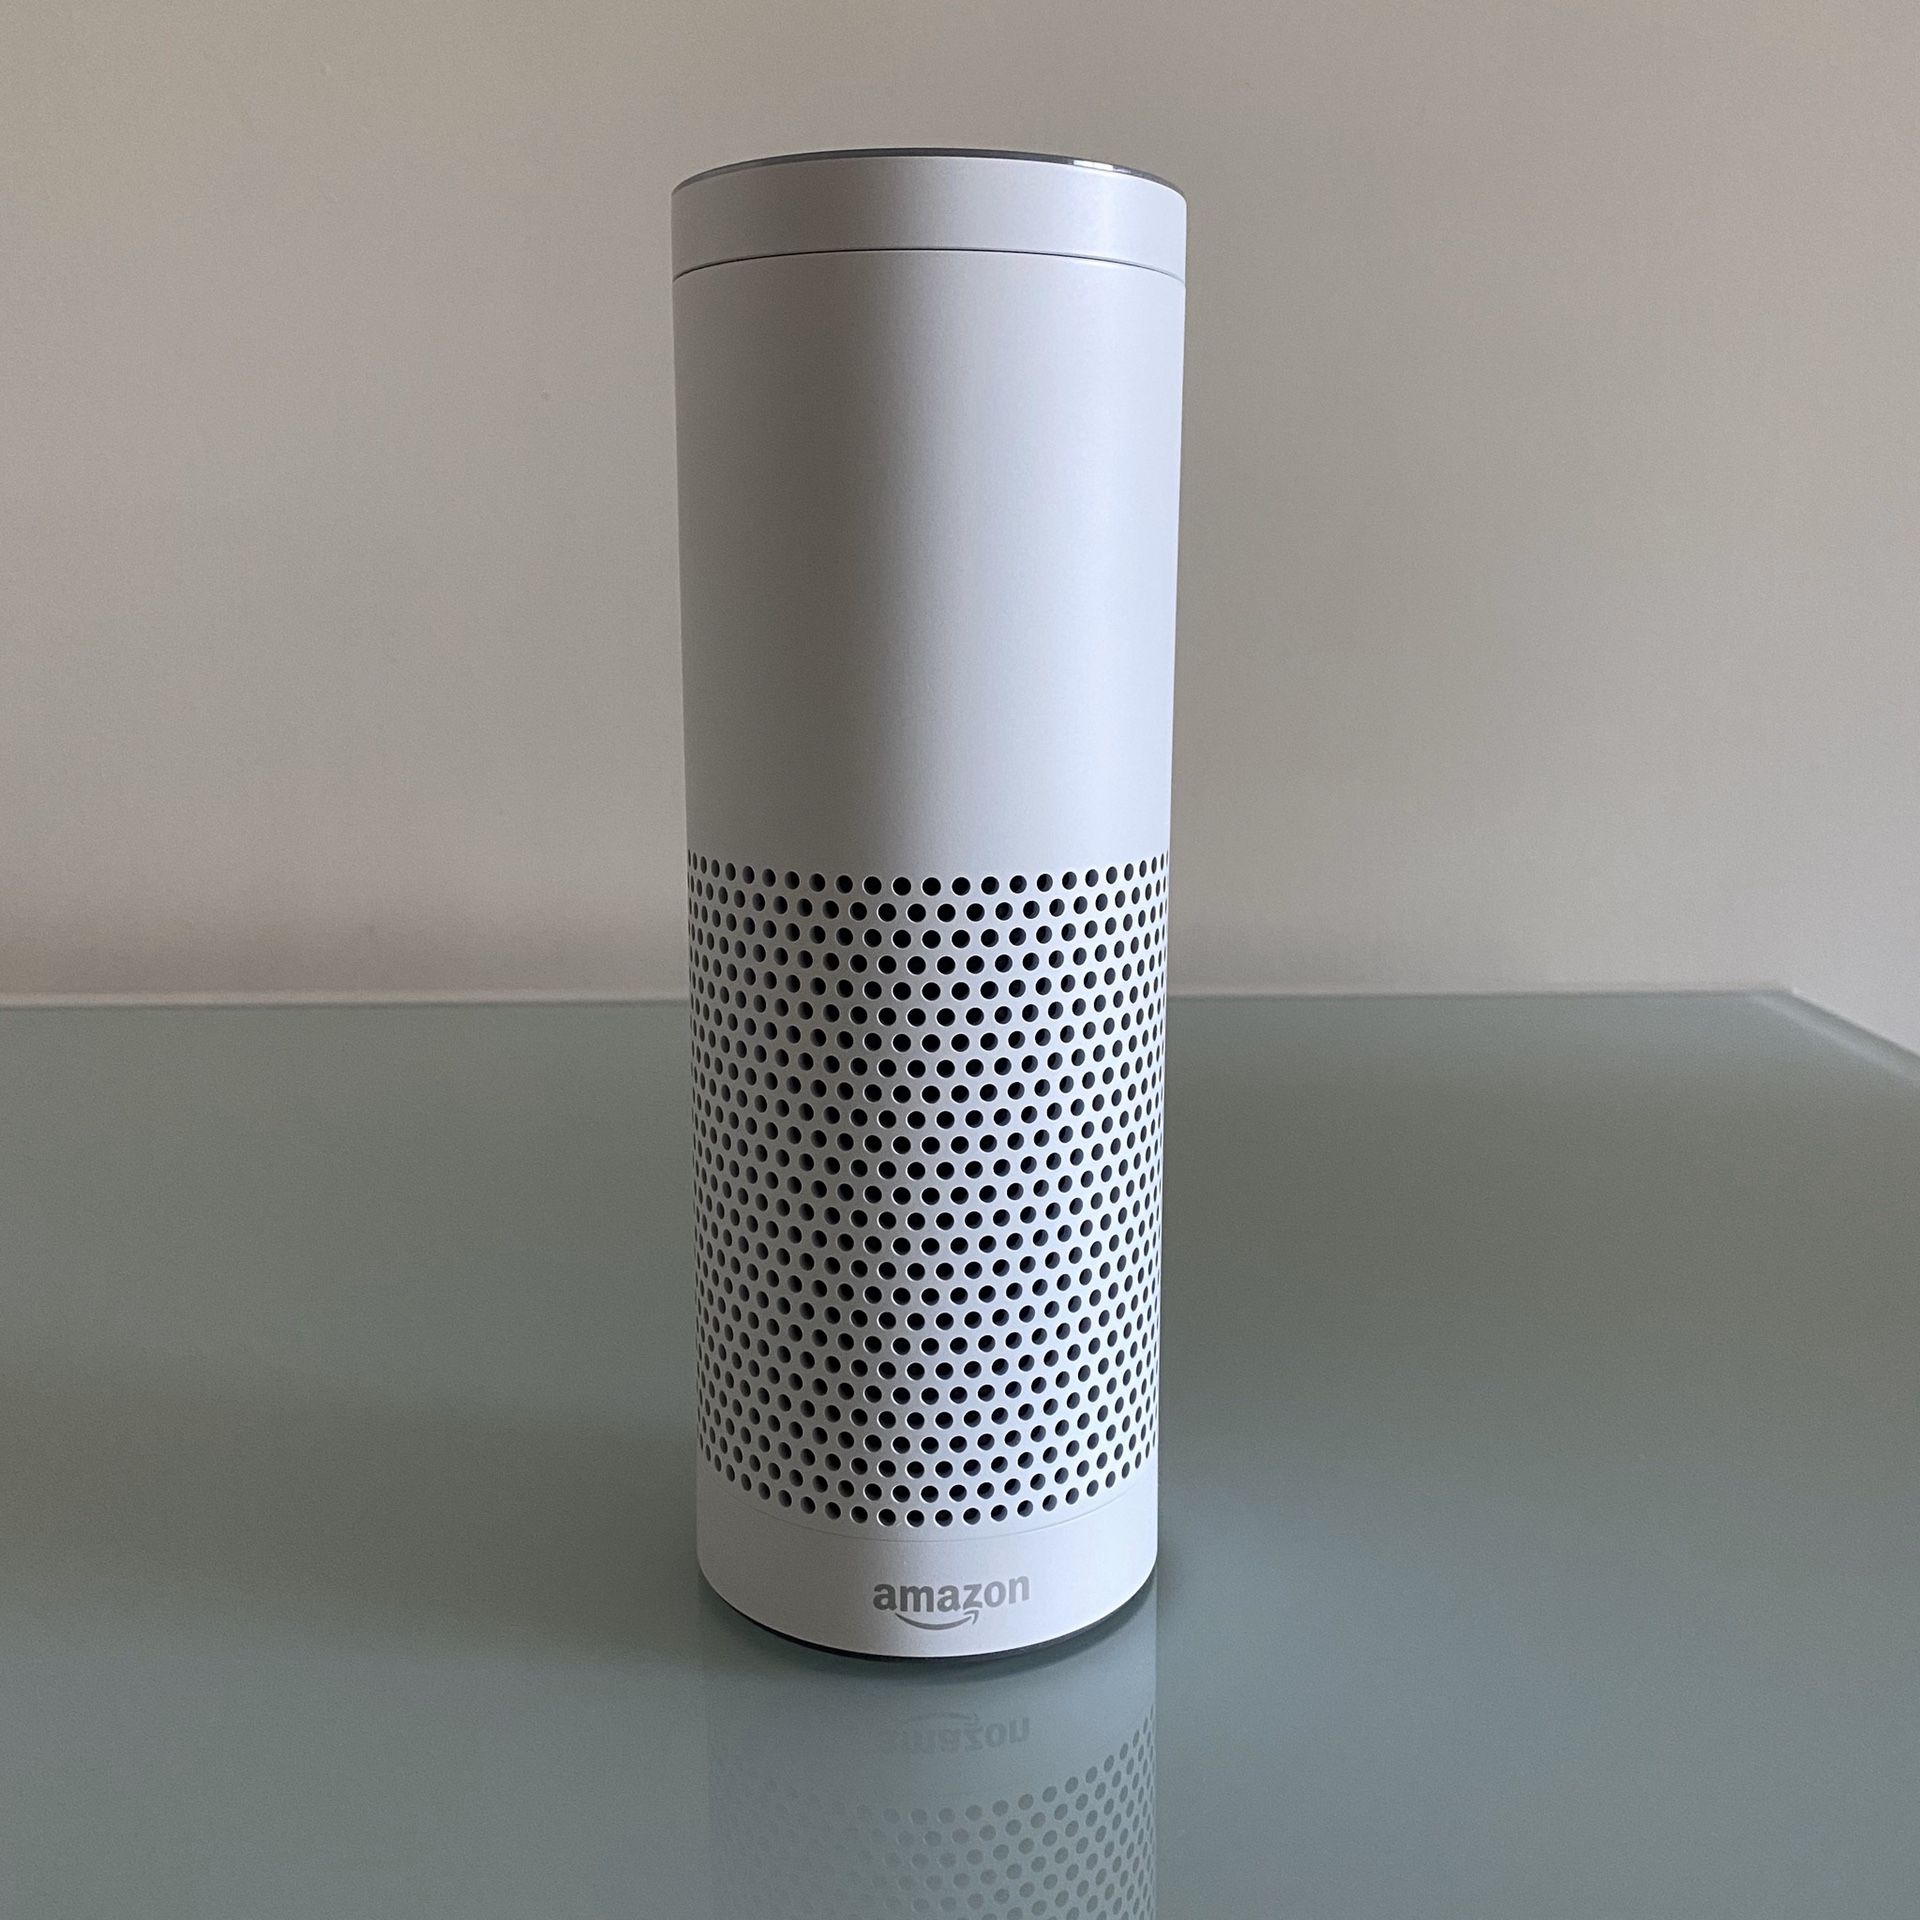 Amazon Echo (1st Generation) Smart Speaker